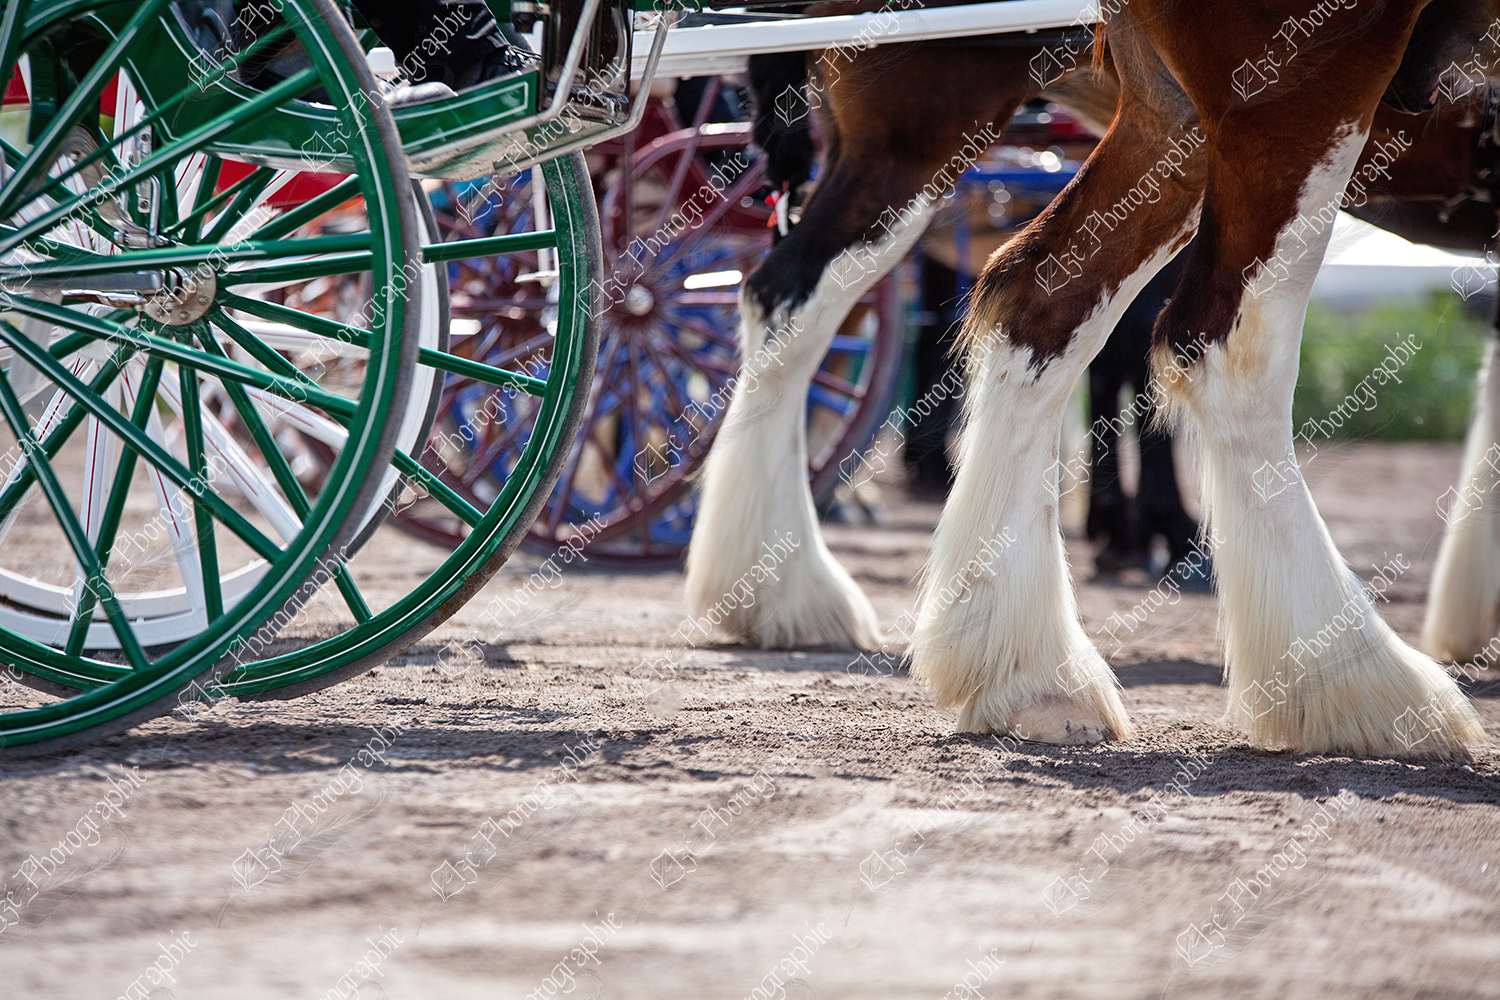 elze_photo_7410_cheval_clydesdale_pattes_horses_legs_cart